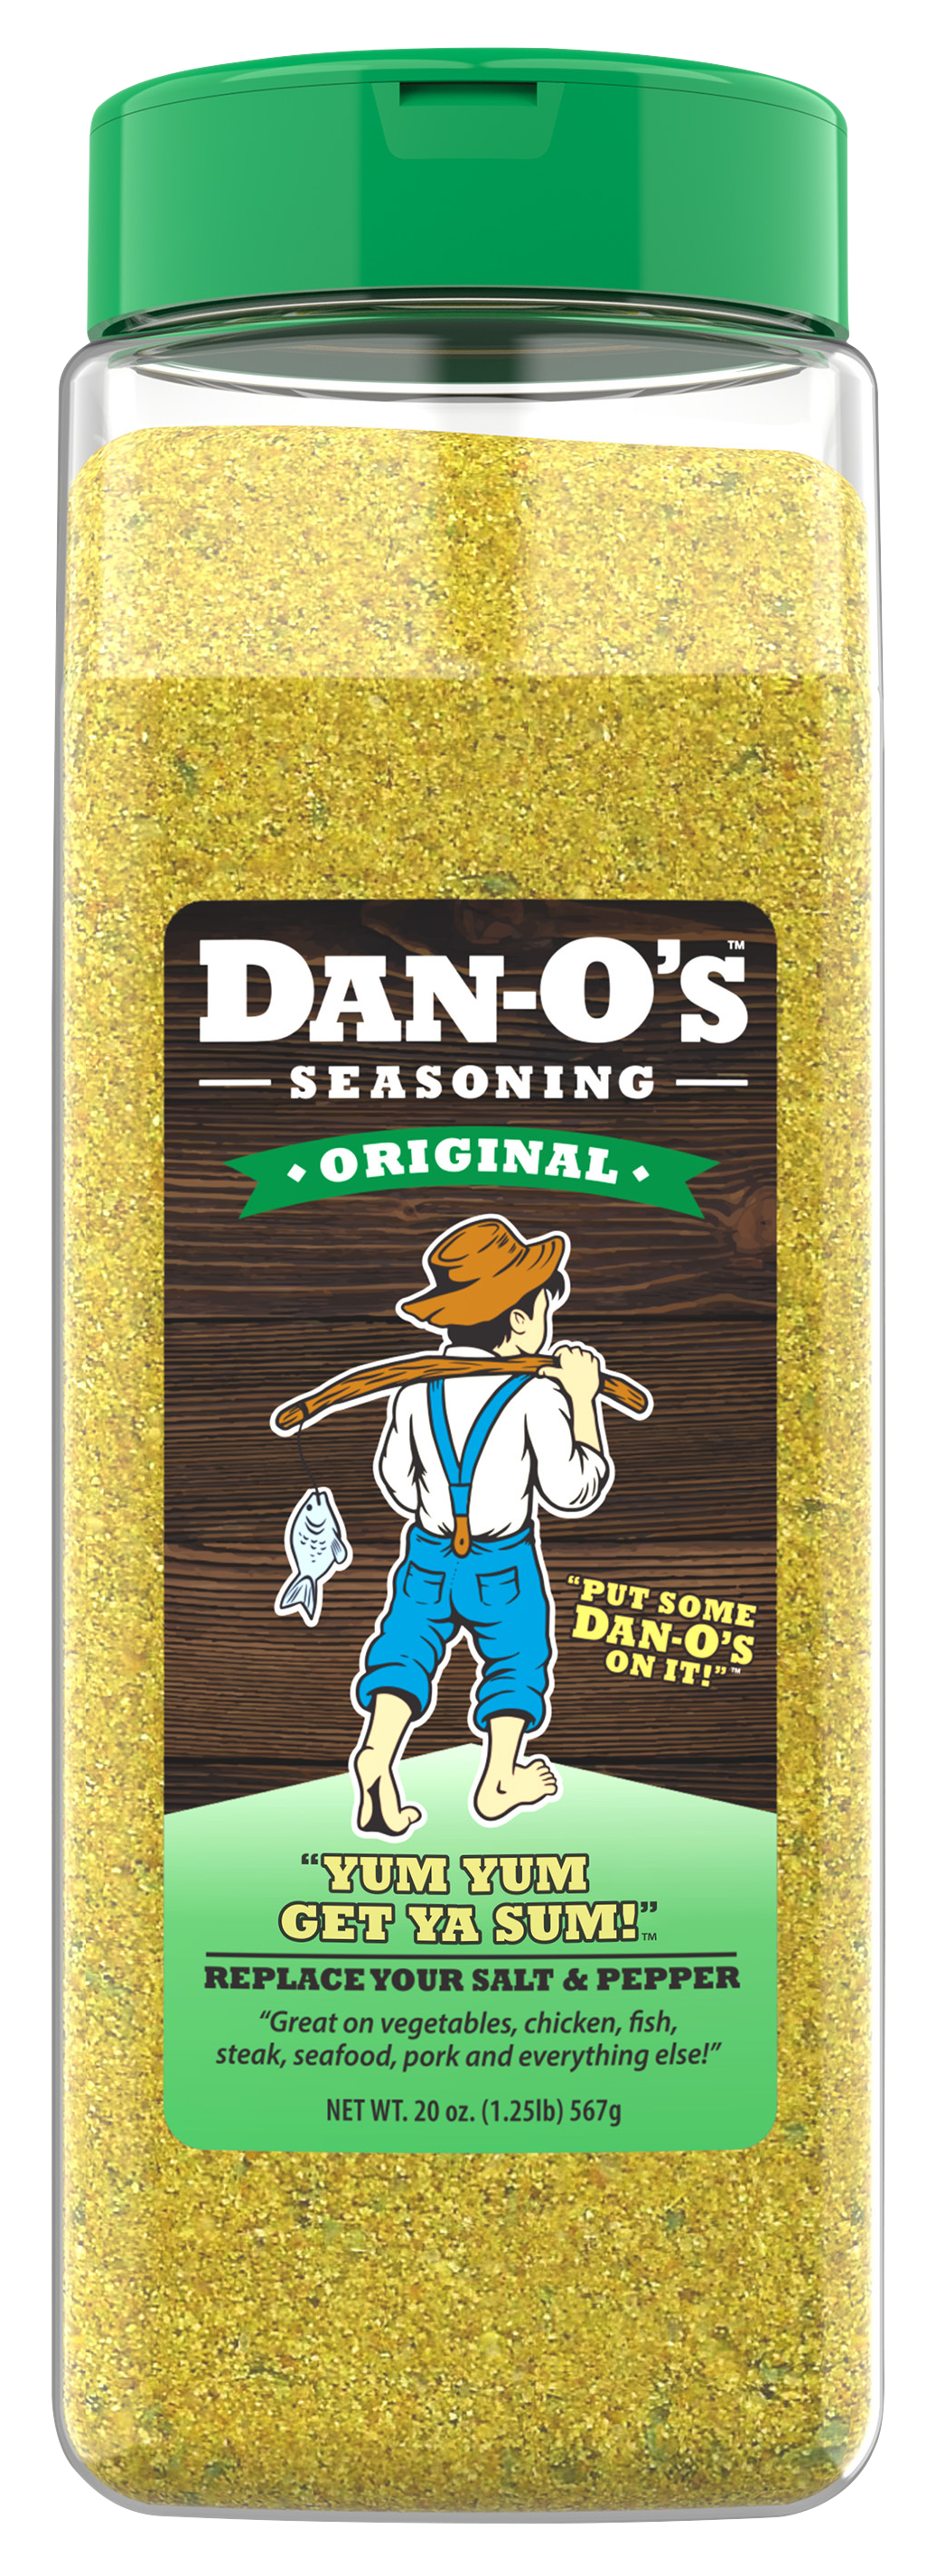 Dan-O's Seasoning added a new photo. - Dan-O's Seasoning